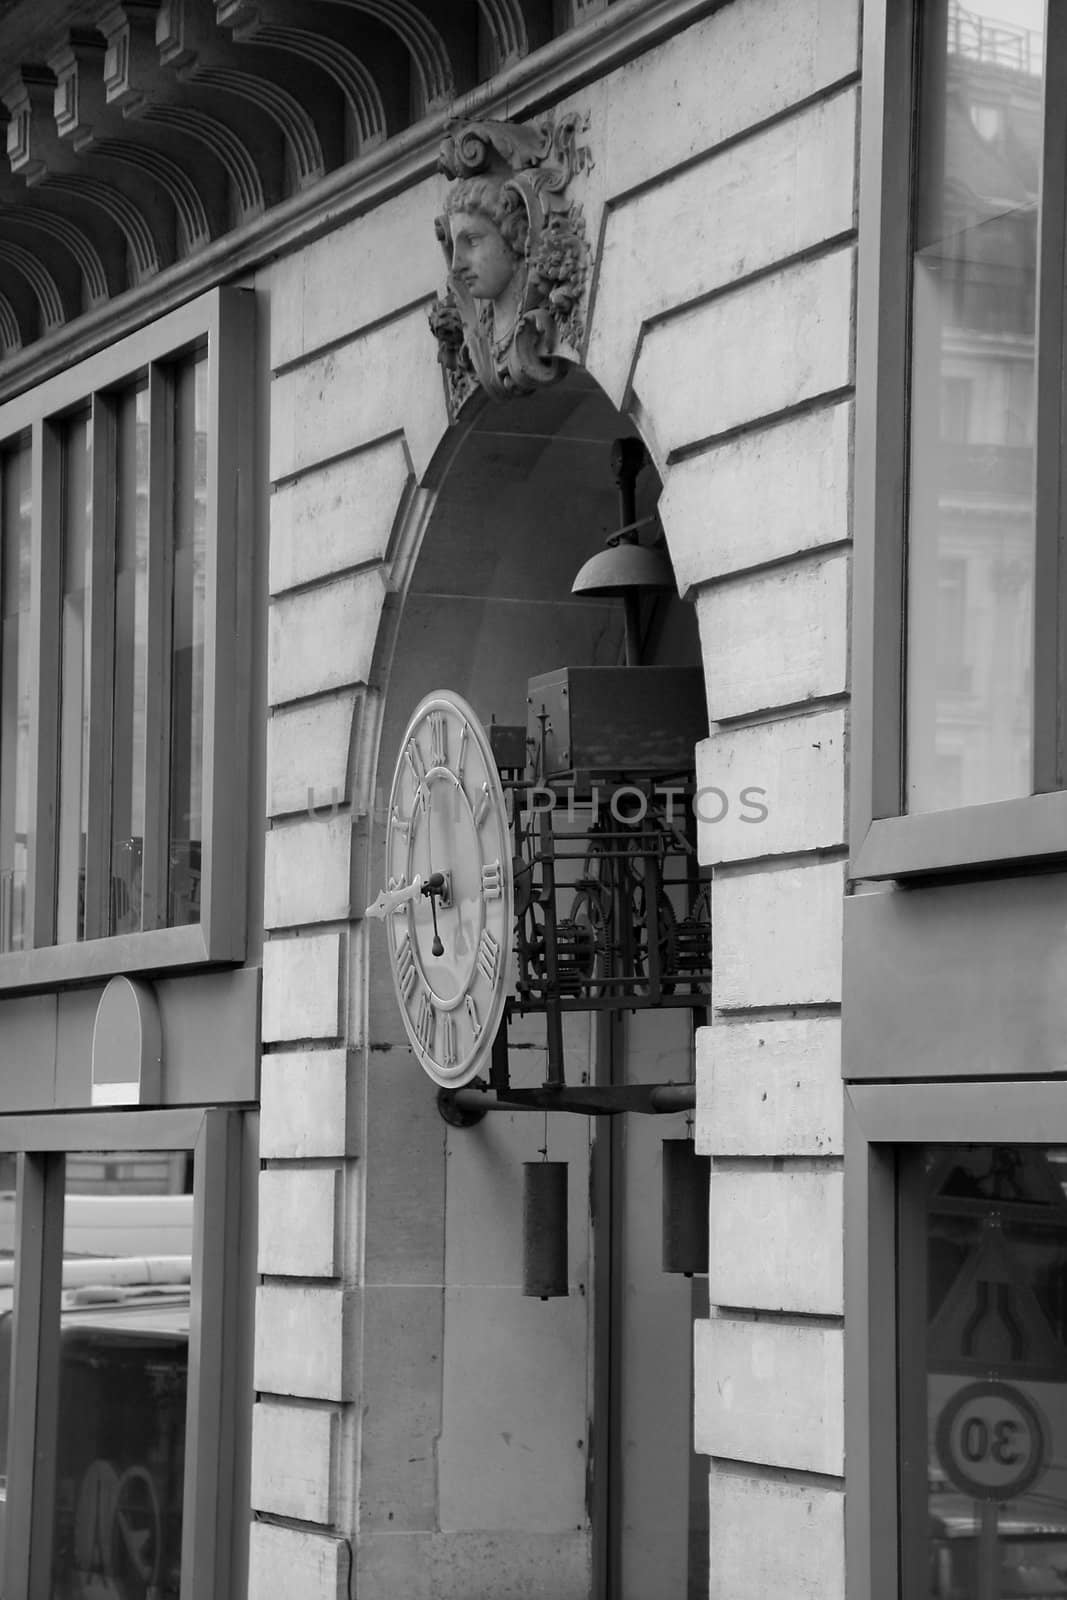 Capital of France - Paris. Street clock near the Grand Opera